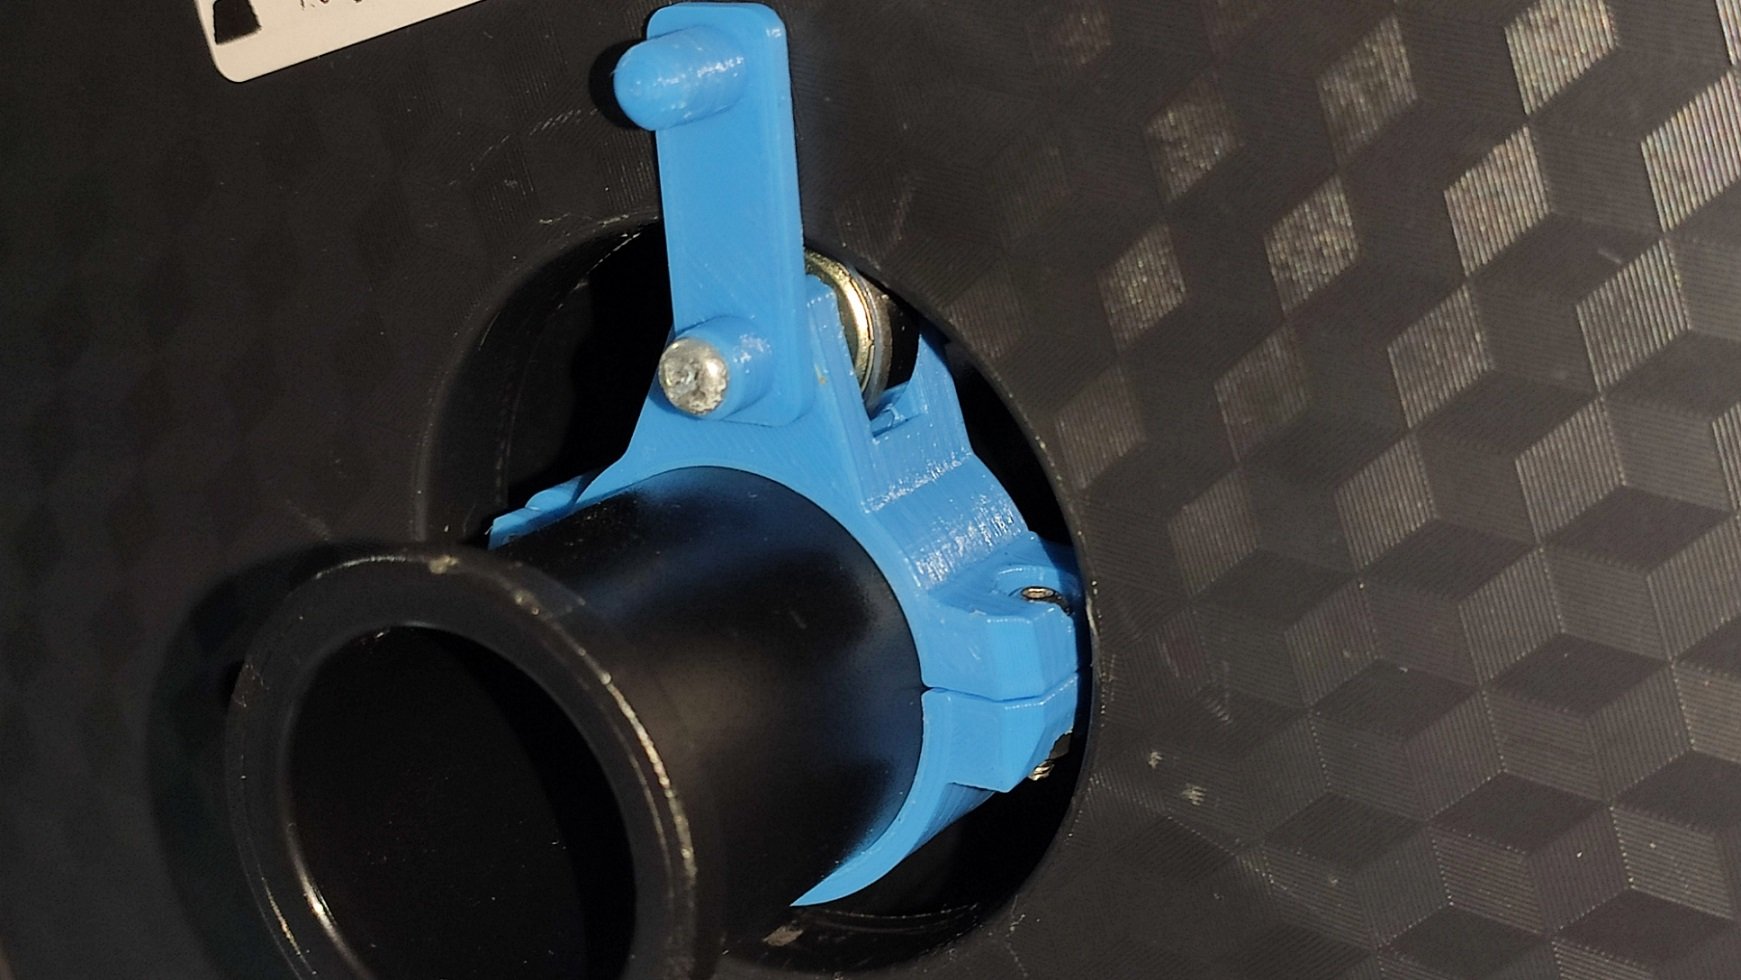 Ender 3v2 Spool Filament Upgrade with Roller Bearing - Minimal Print